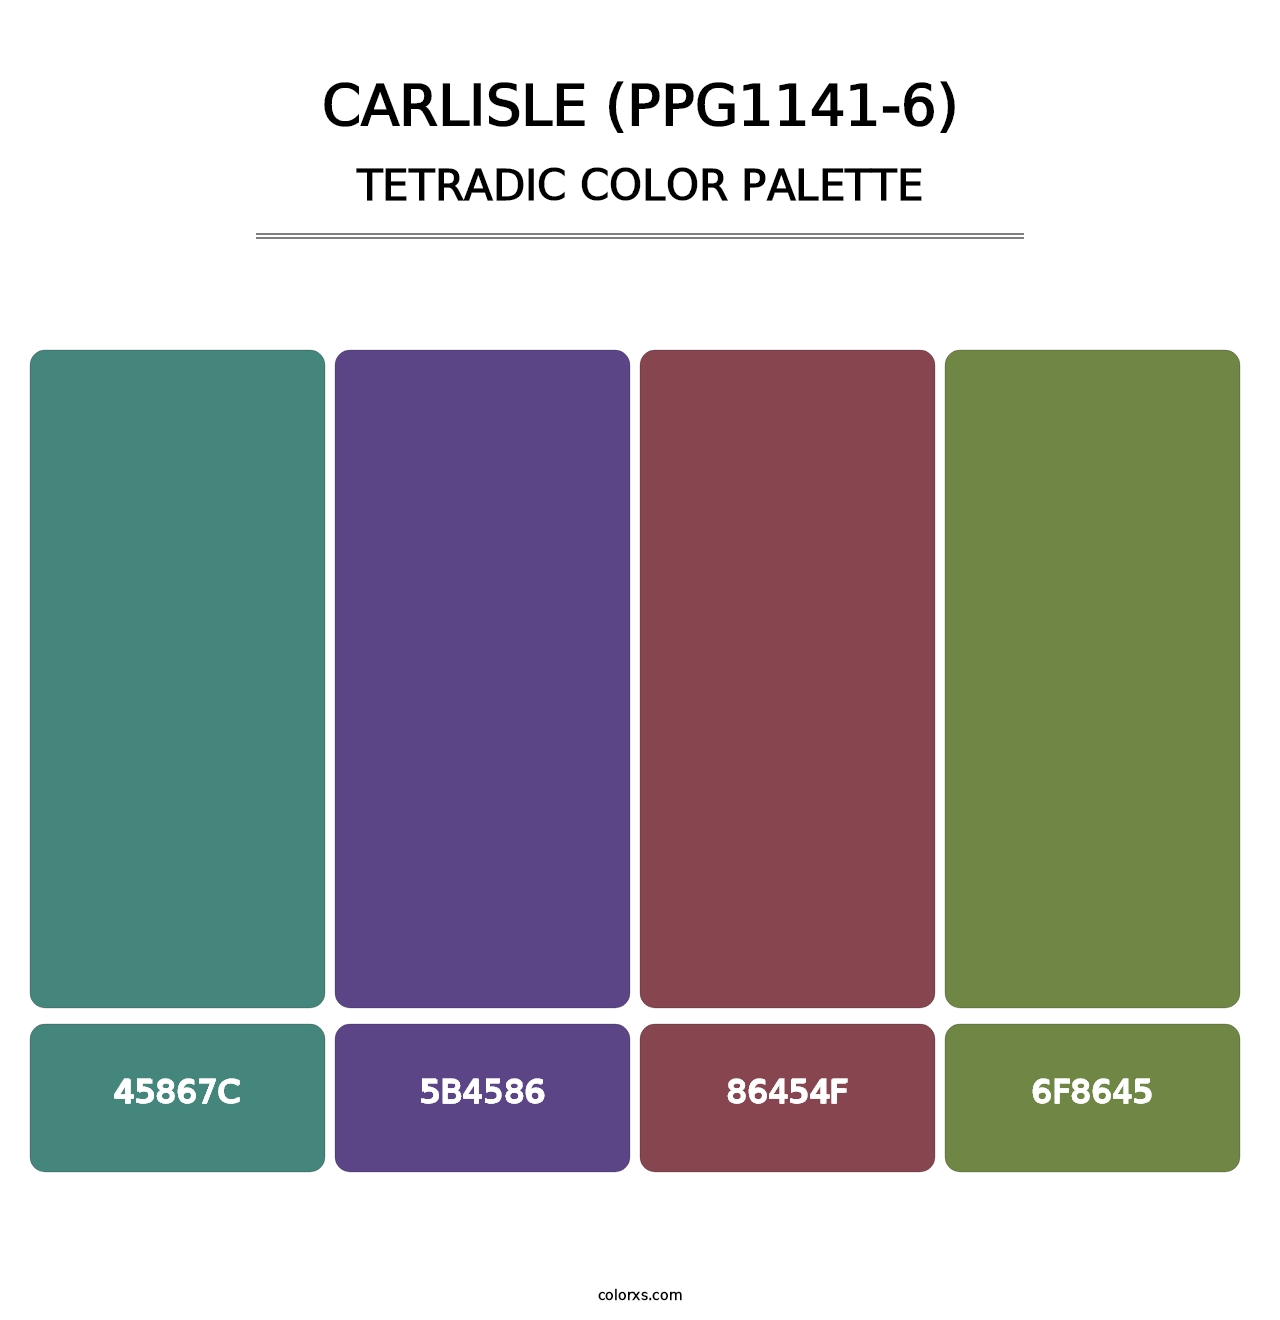 Carlisle (PPG1141-6) - Tetradic Color Palette